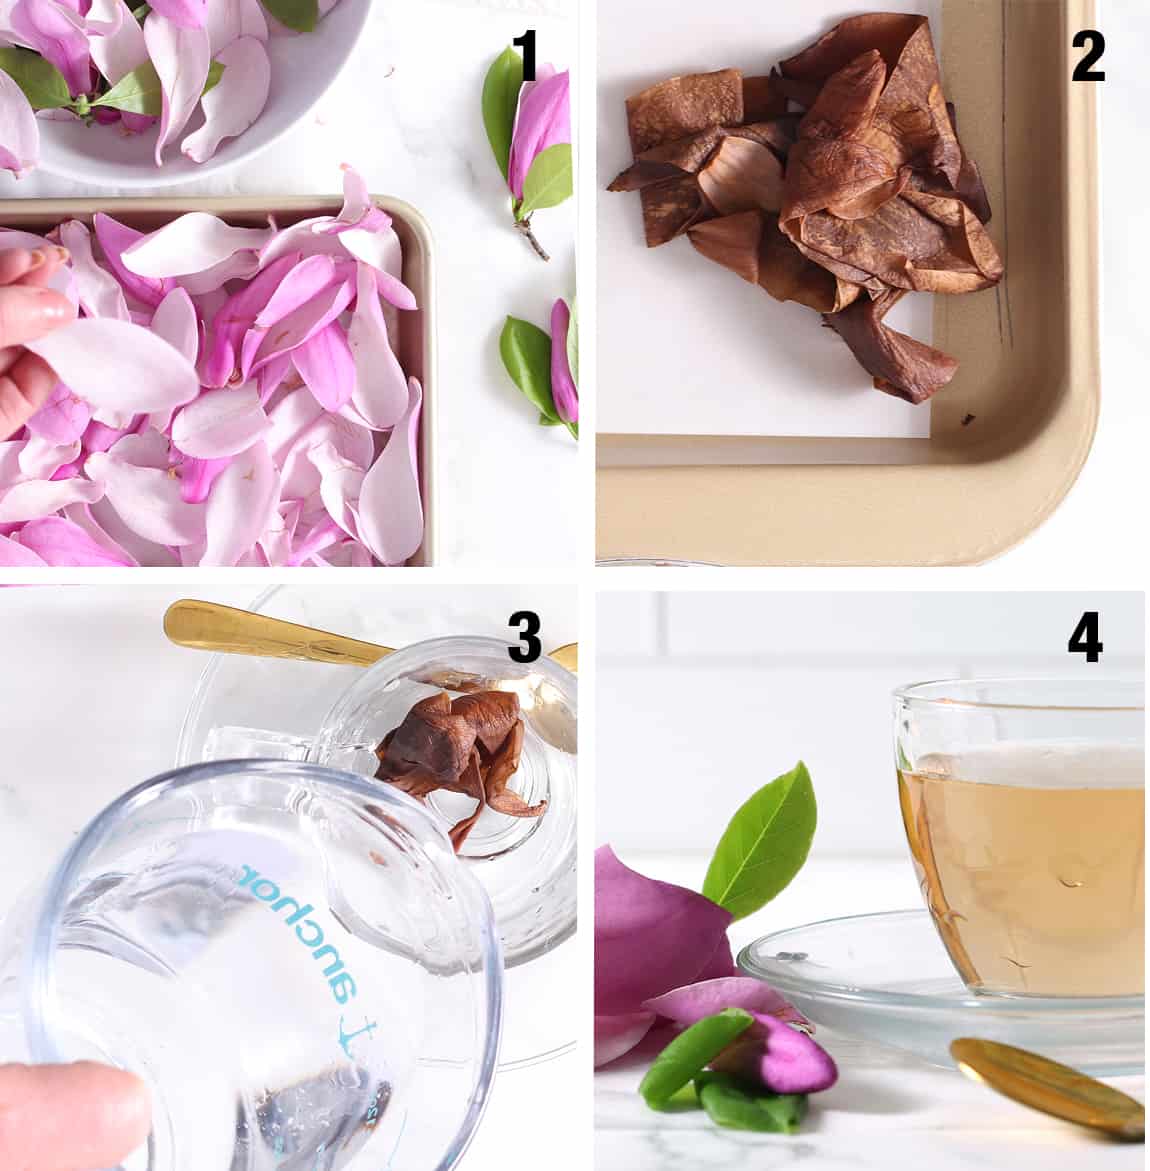 steps to dehydrate magnolia petals to make tea